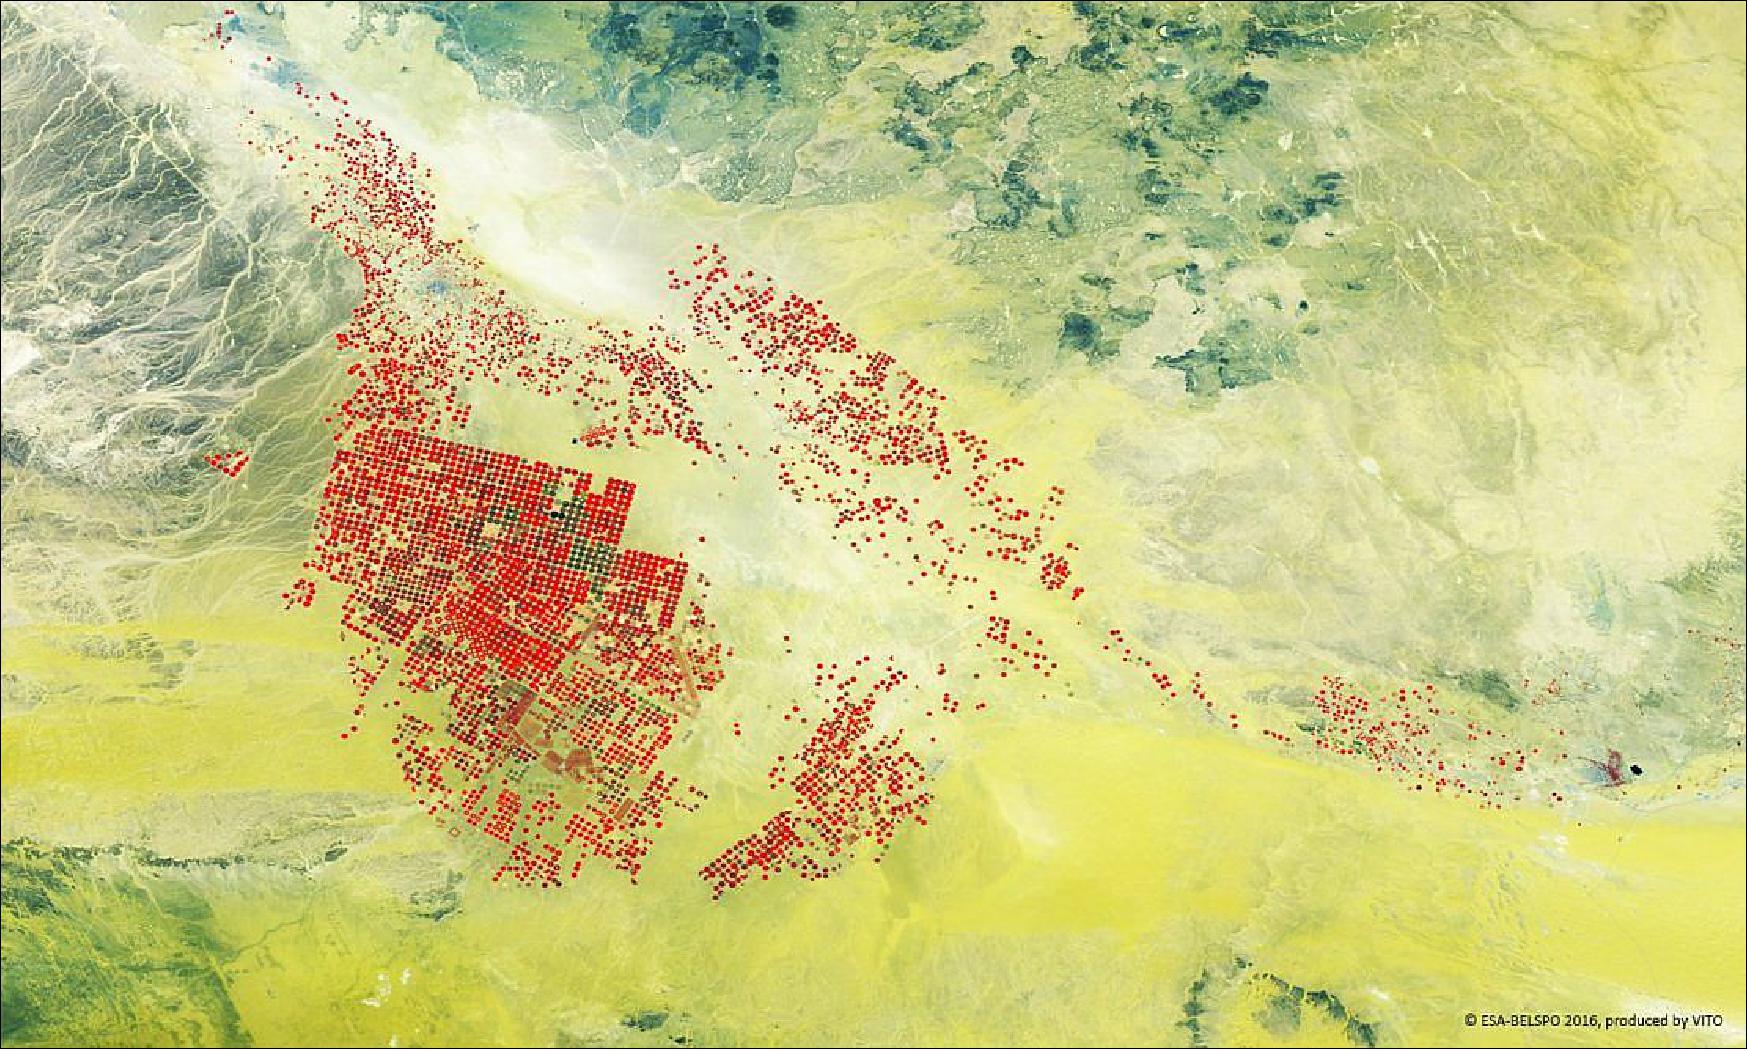 Figure 45: False-color crops bloom in the Saudi Arabian desert, imaged by ESA's PROBA-V minisatellite (image credit: ESA/BELSPO, provided by VITO)